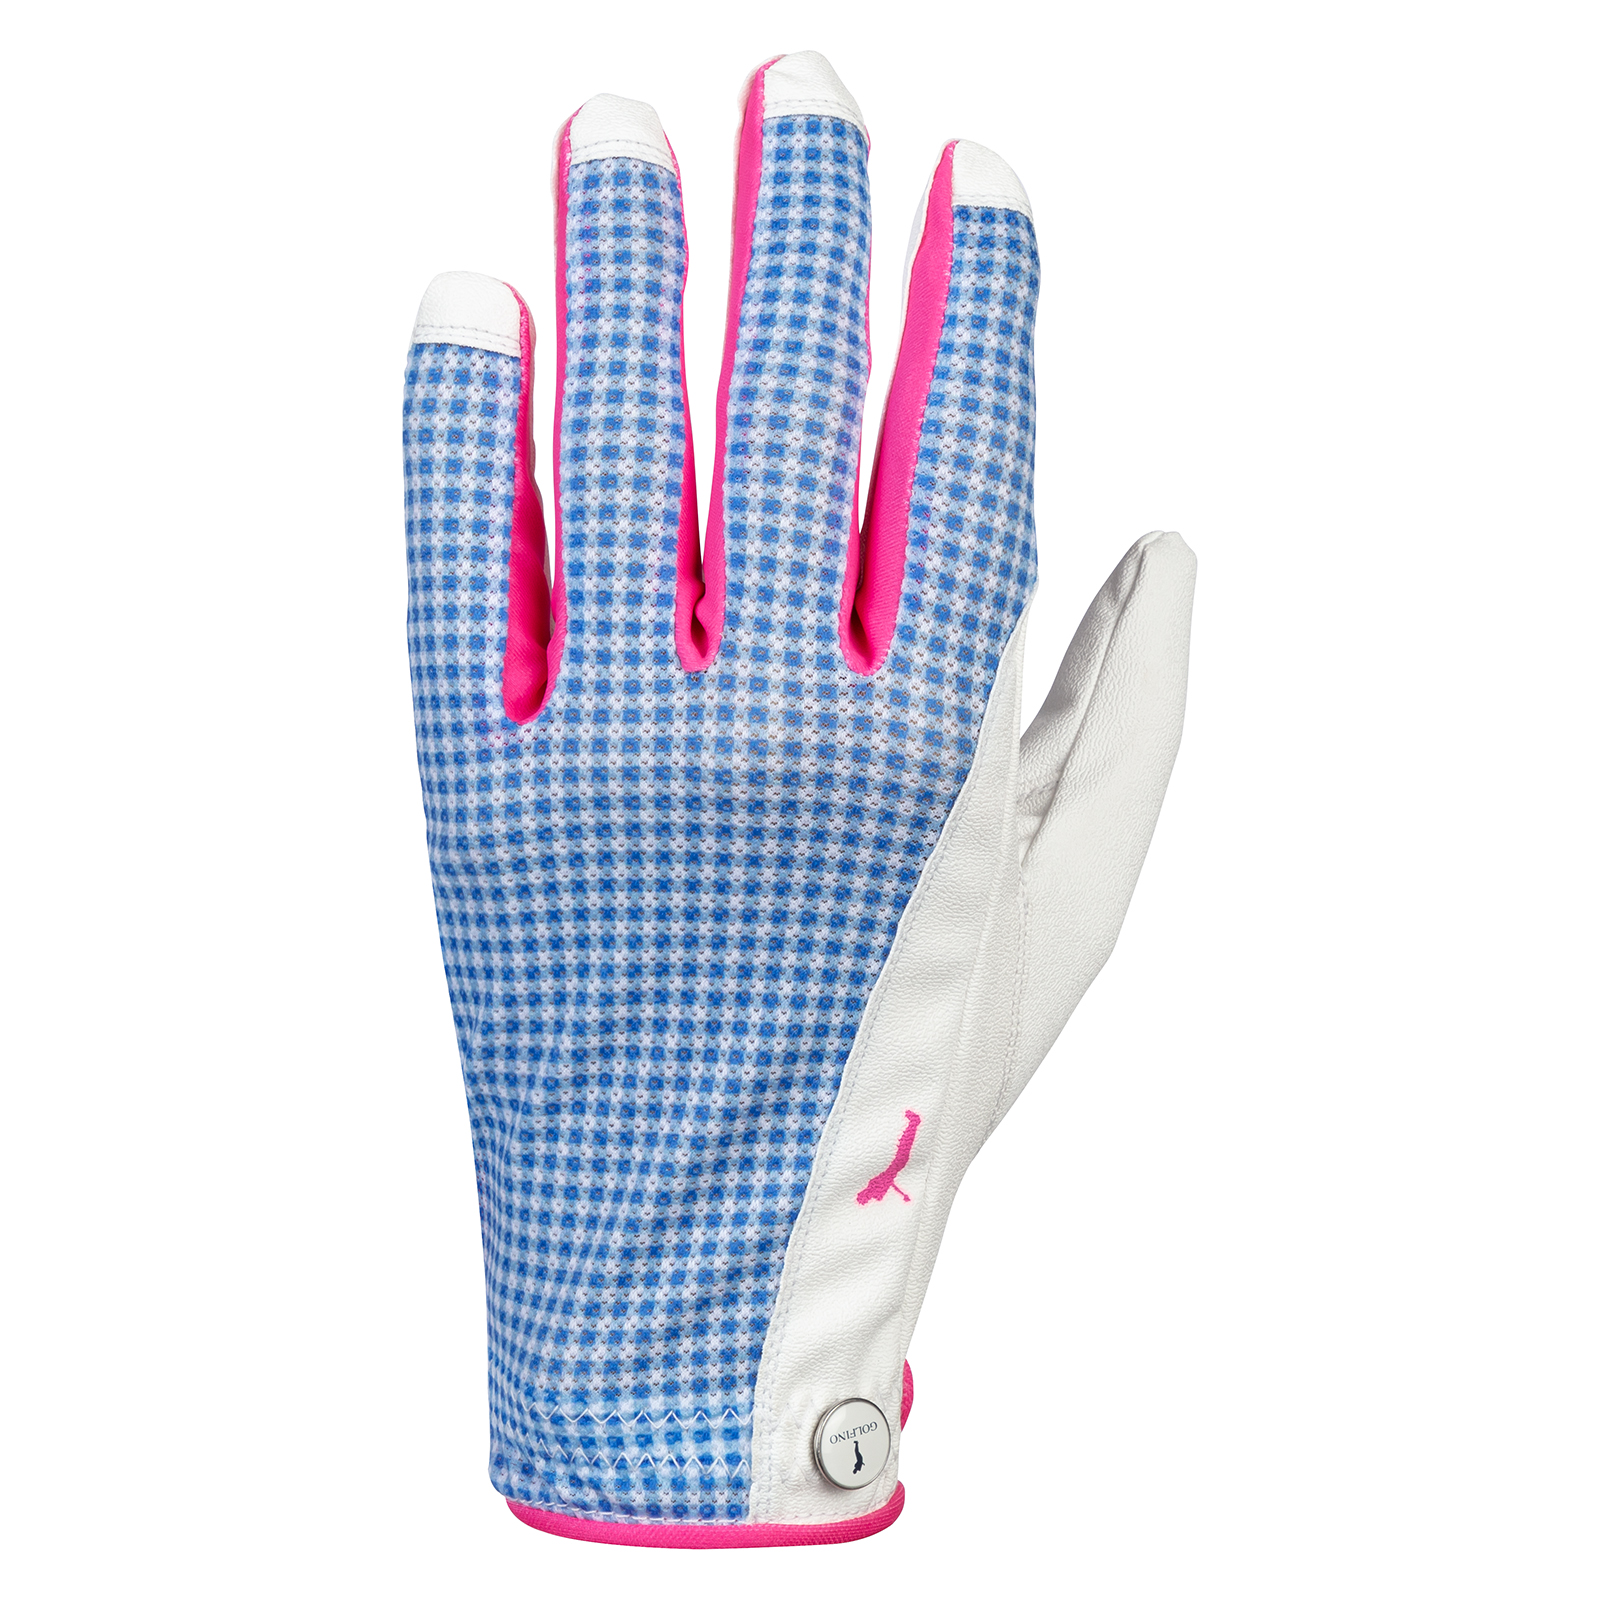 Damen Golf Handschuh links aus veganem Leder mit Vichy Karo